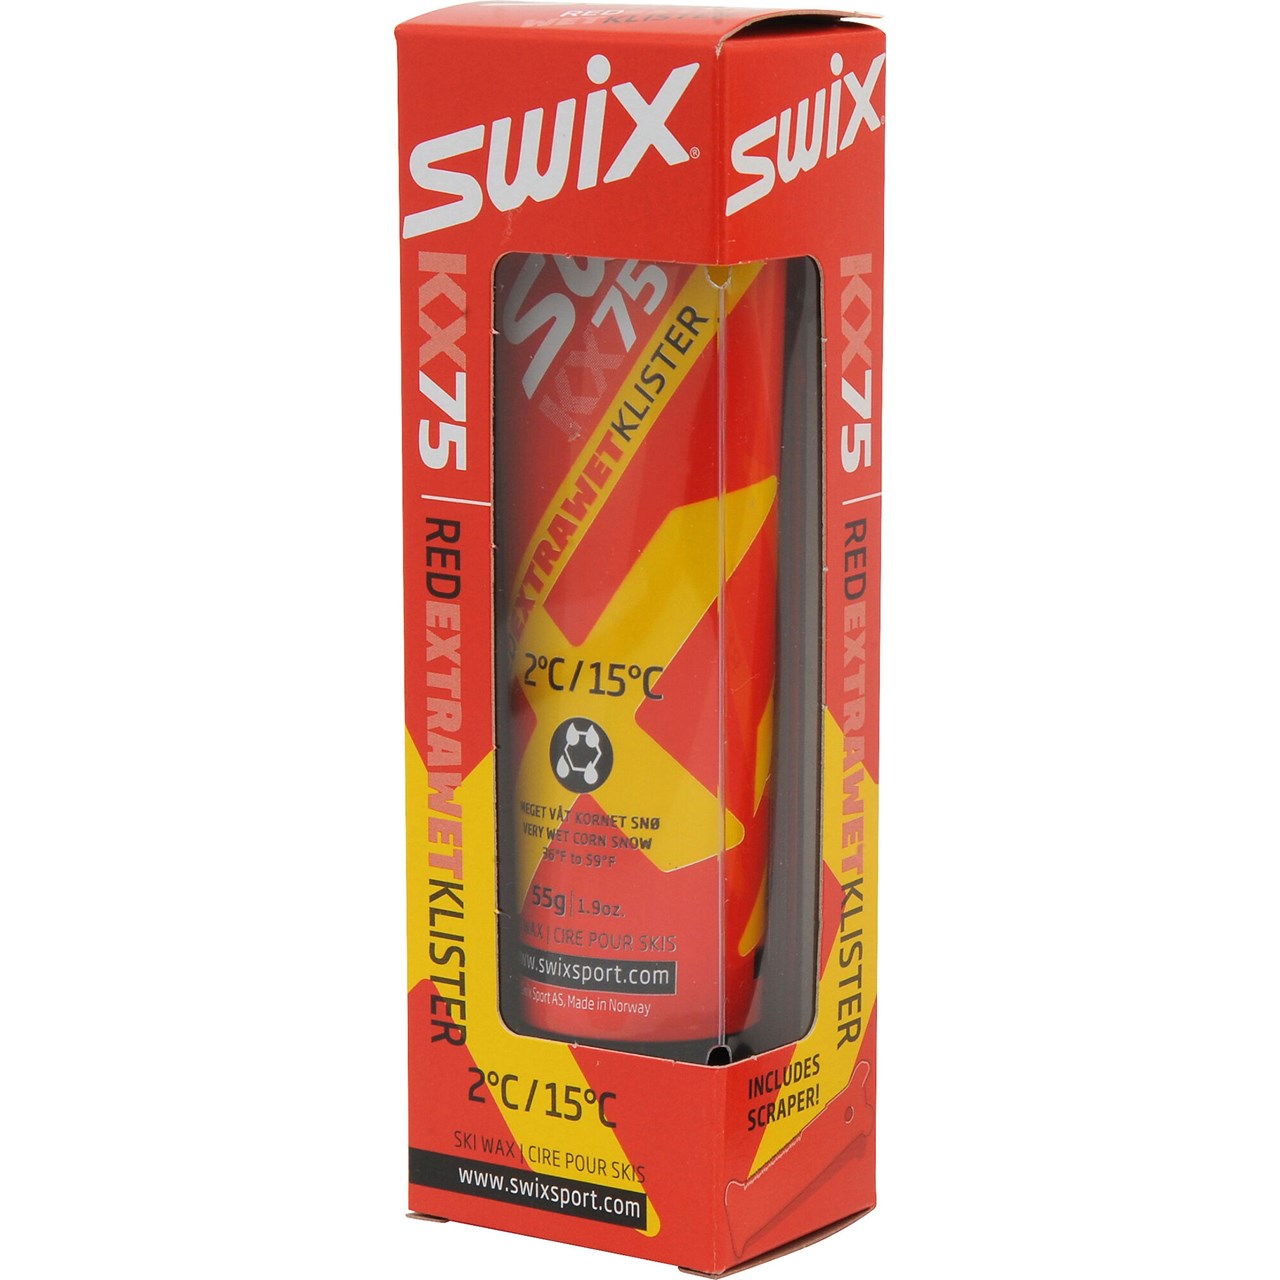 SWIX KX 75 RED EXTRA WET KLISTER 2C / 15C